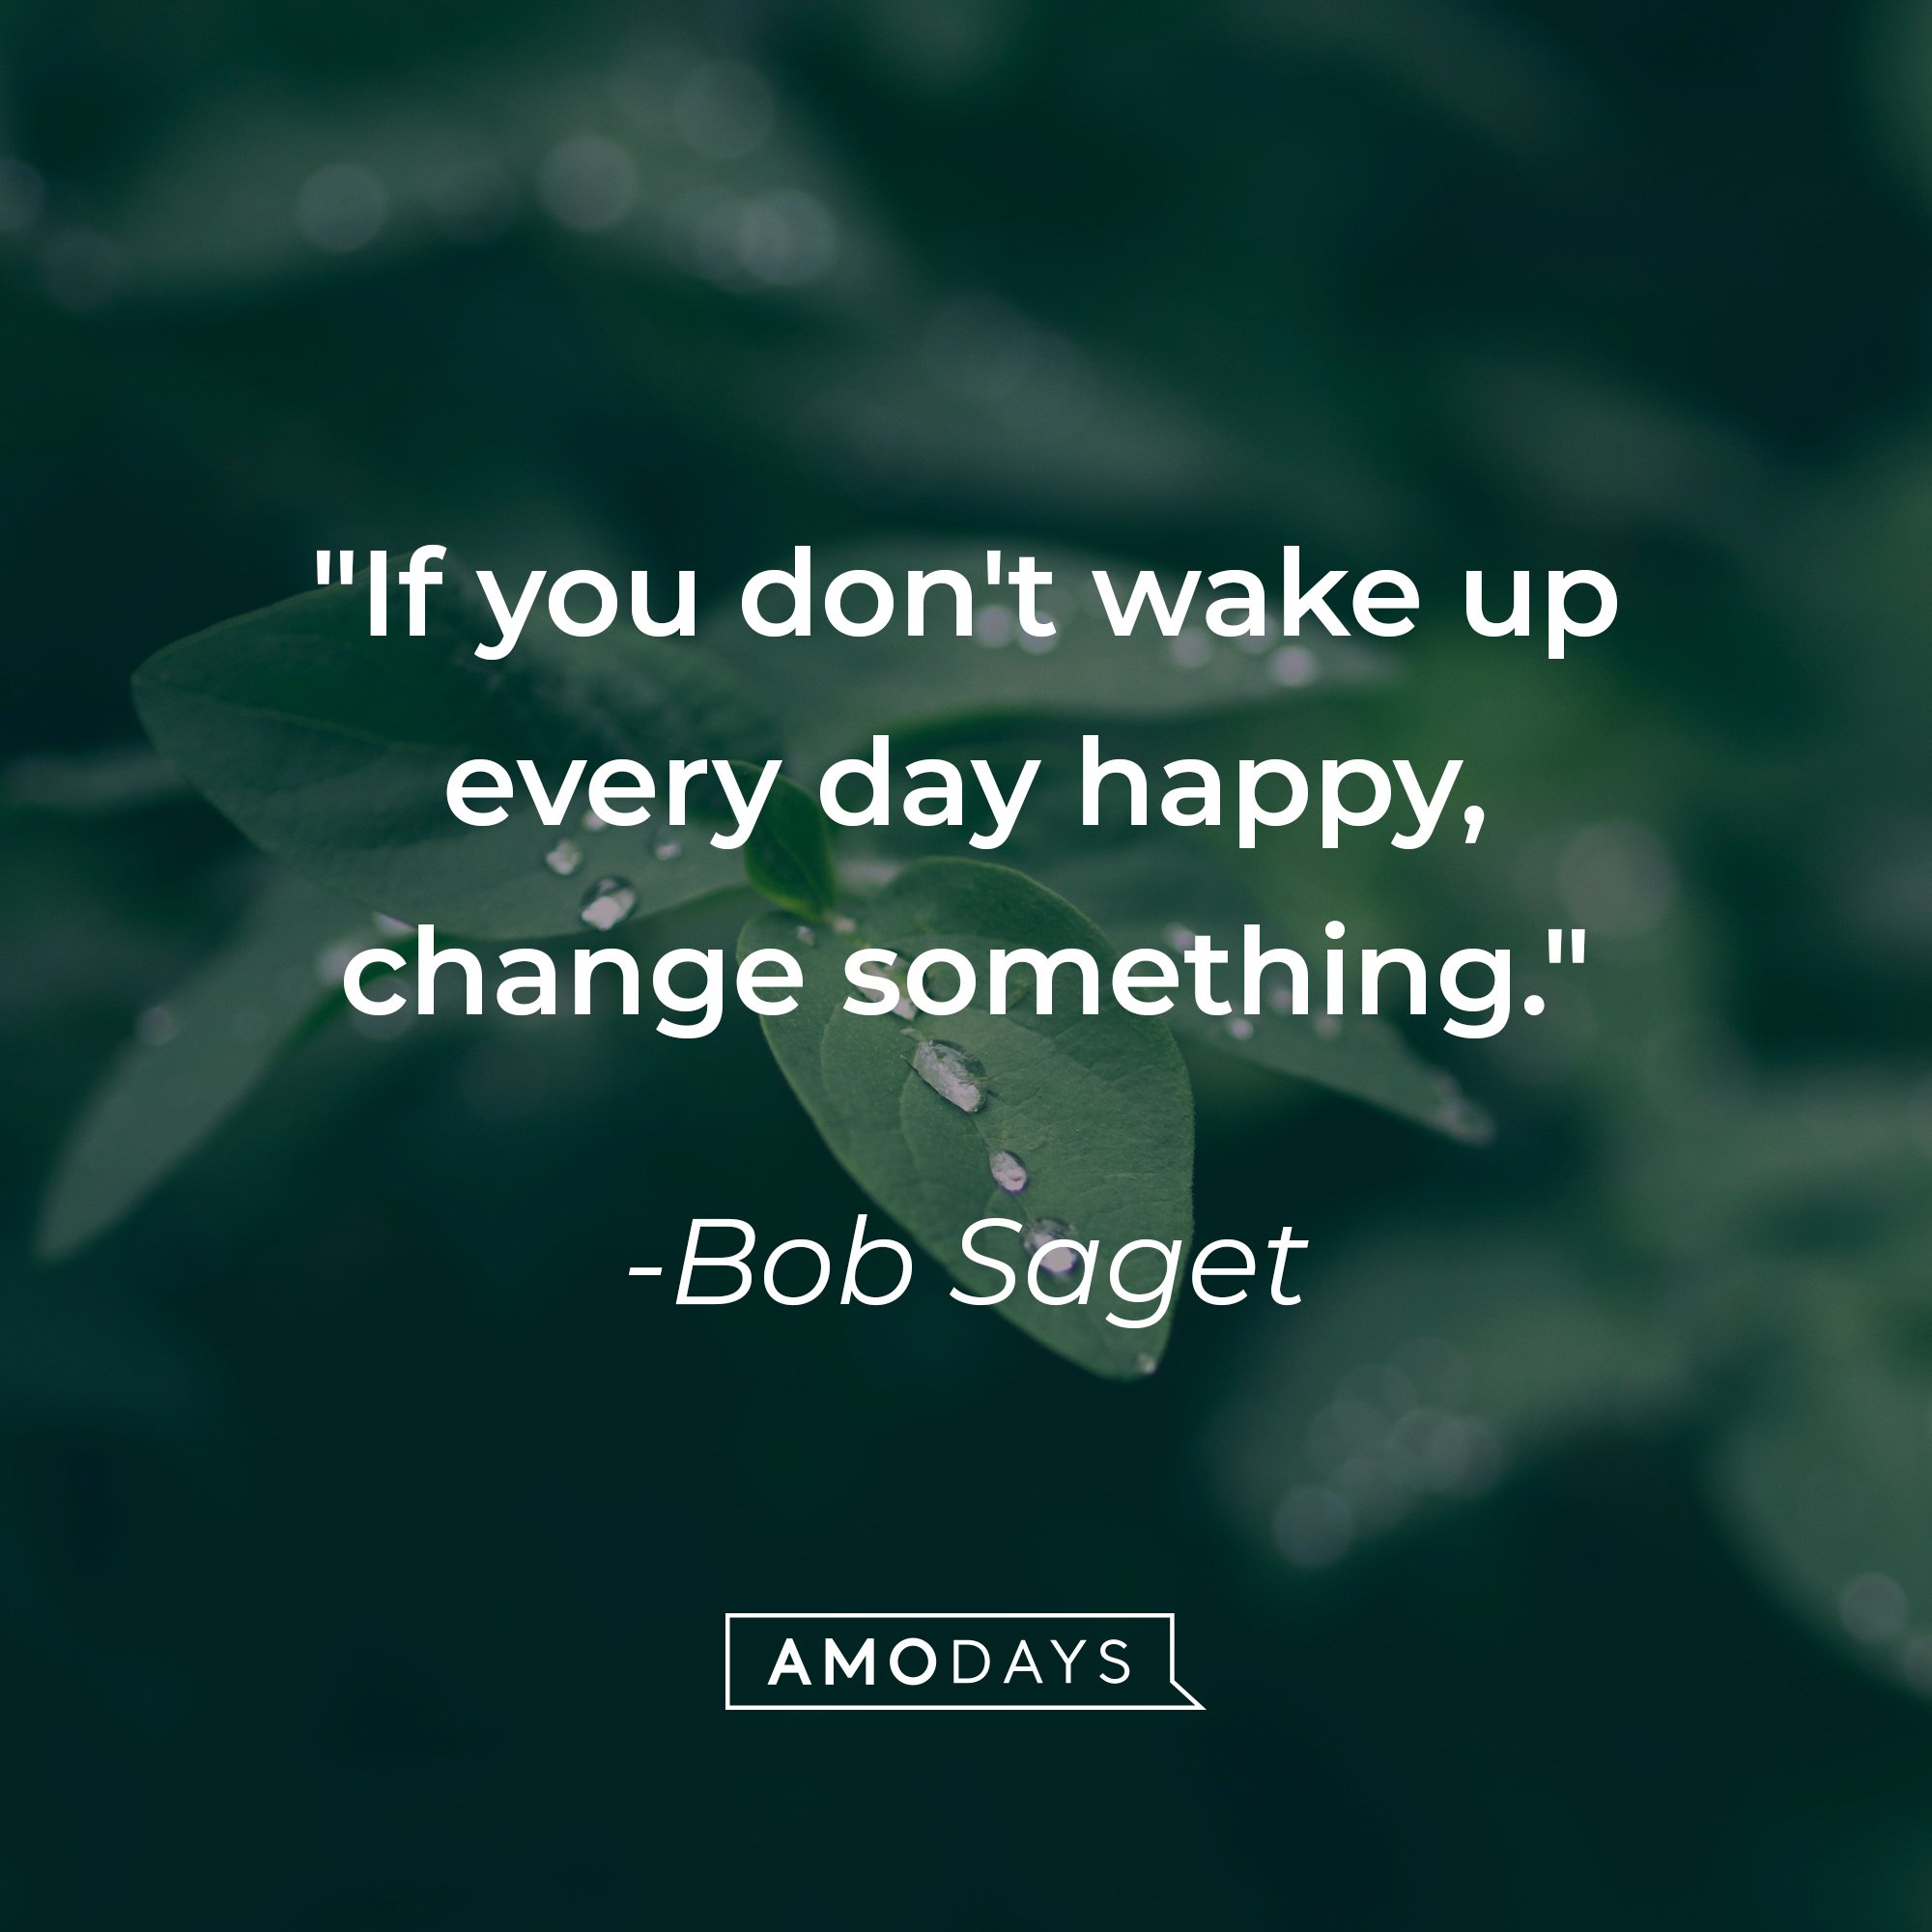  Bob Saget’s quote: "If you don't wake up every day happy, change something." | Image: AmoDays